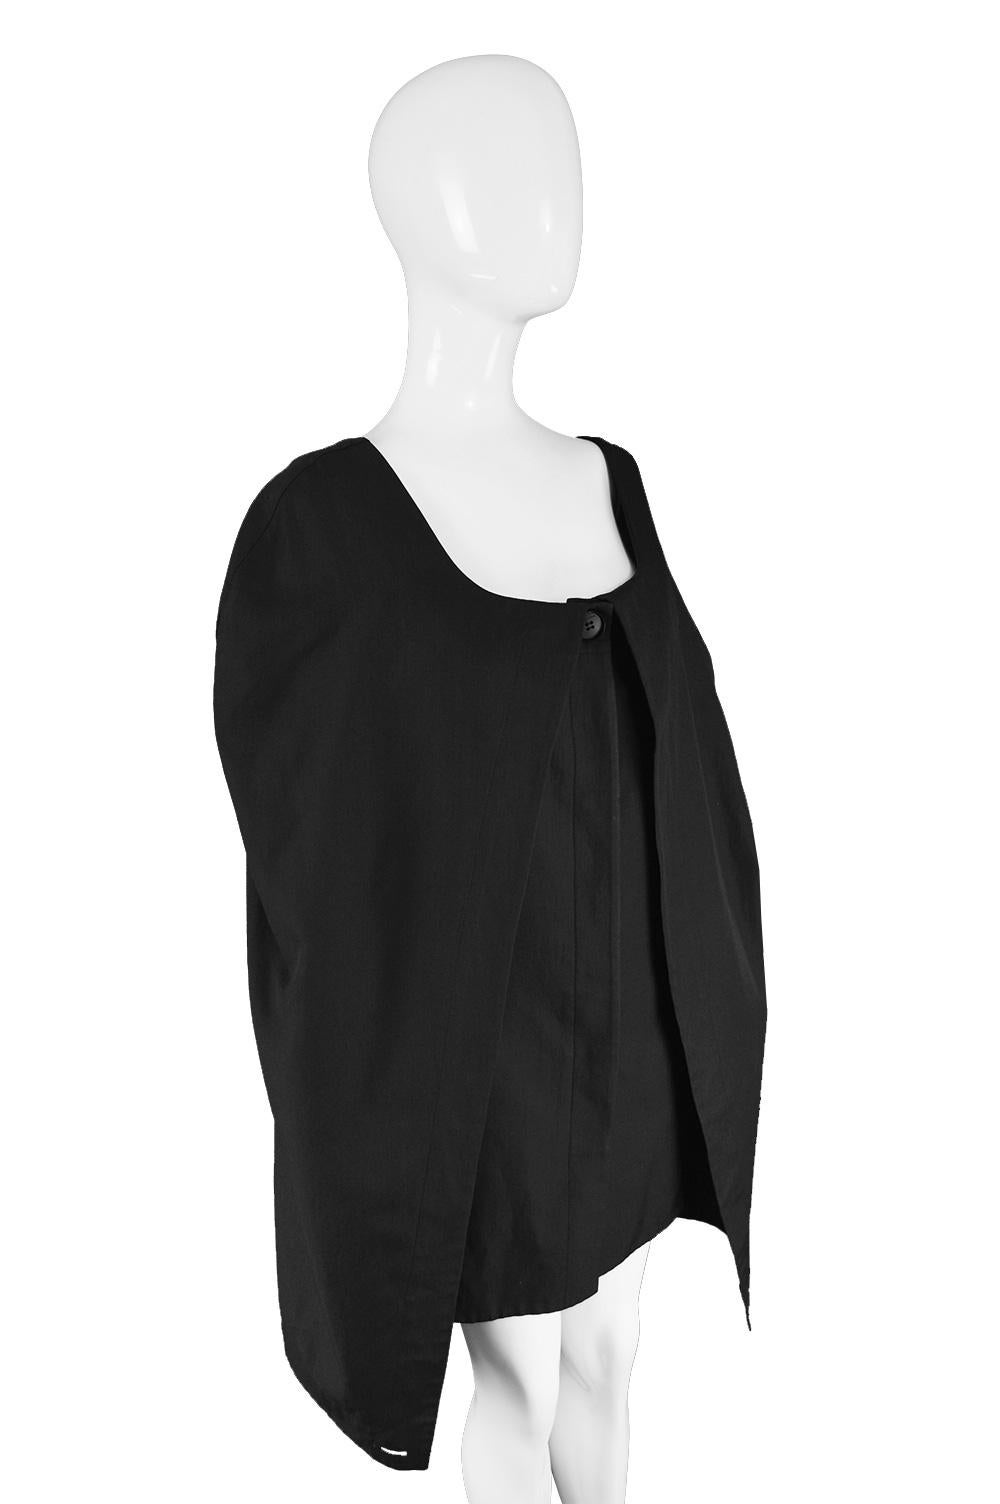 Women's Early John Galliano Black Avant Garde Cape Dress Made in Britain, 1980s